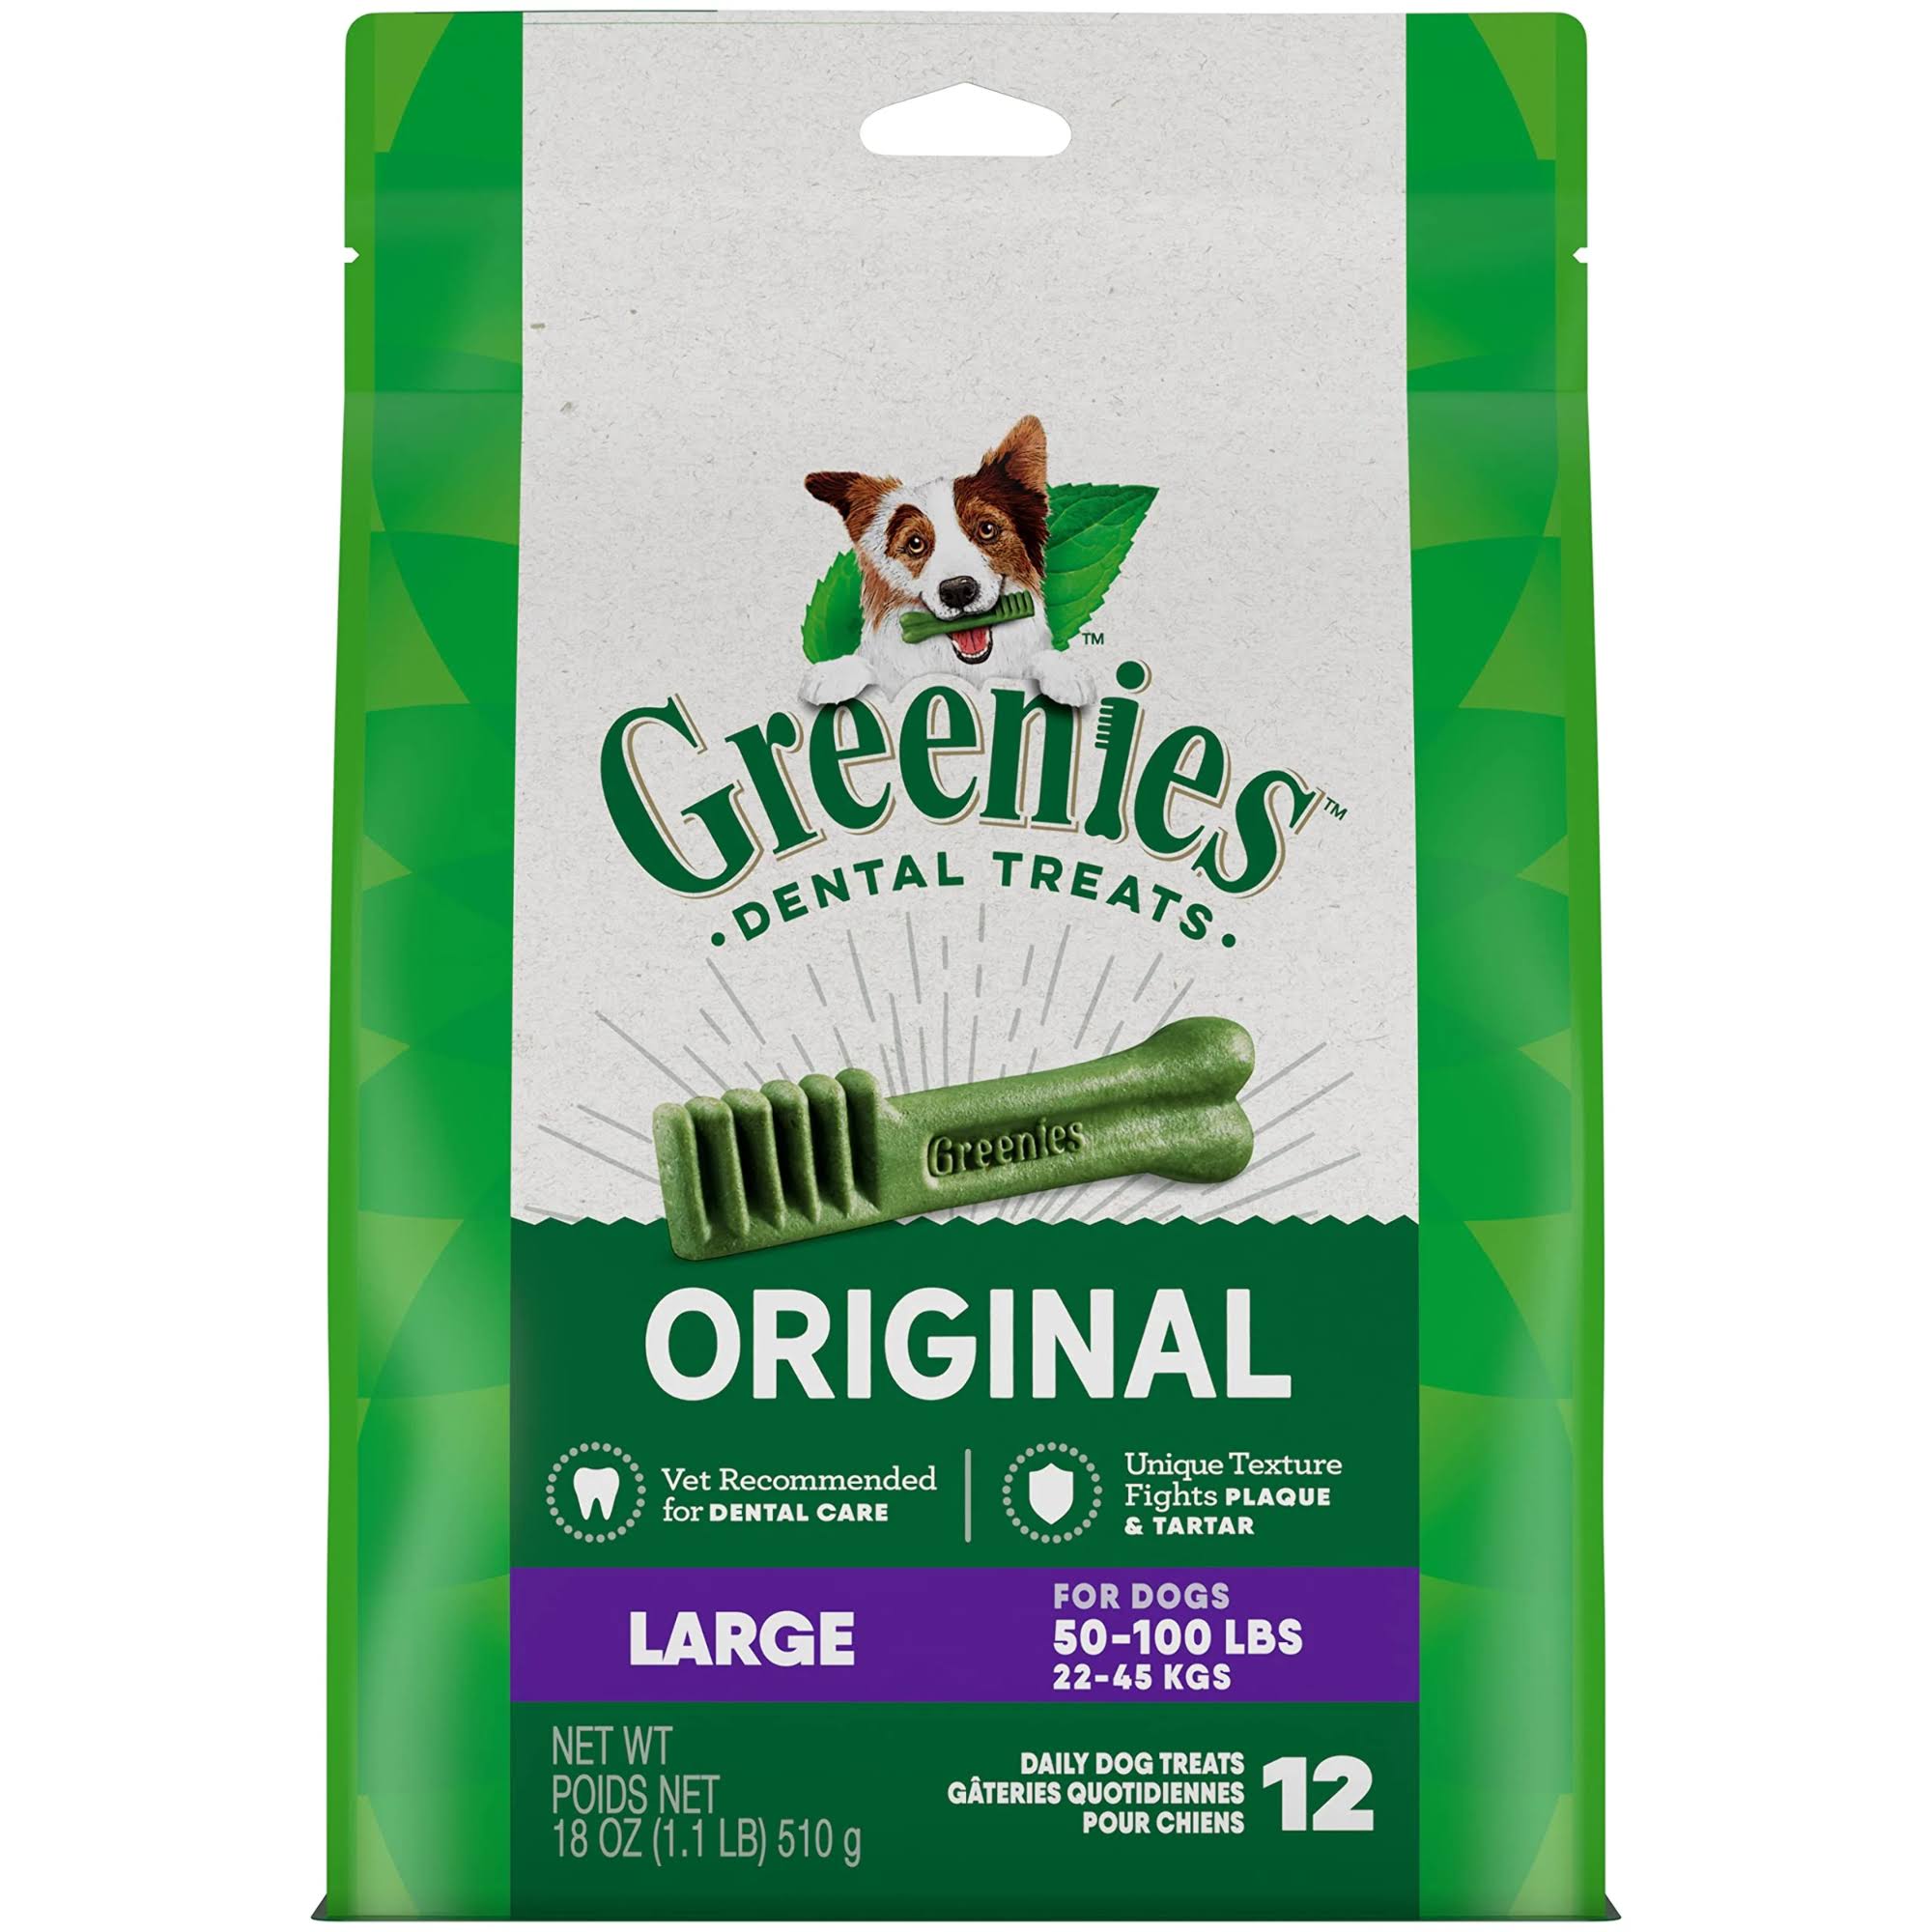 Greenies Dental Dog Treats - Large, Original Flavor, x12